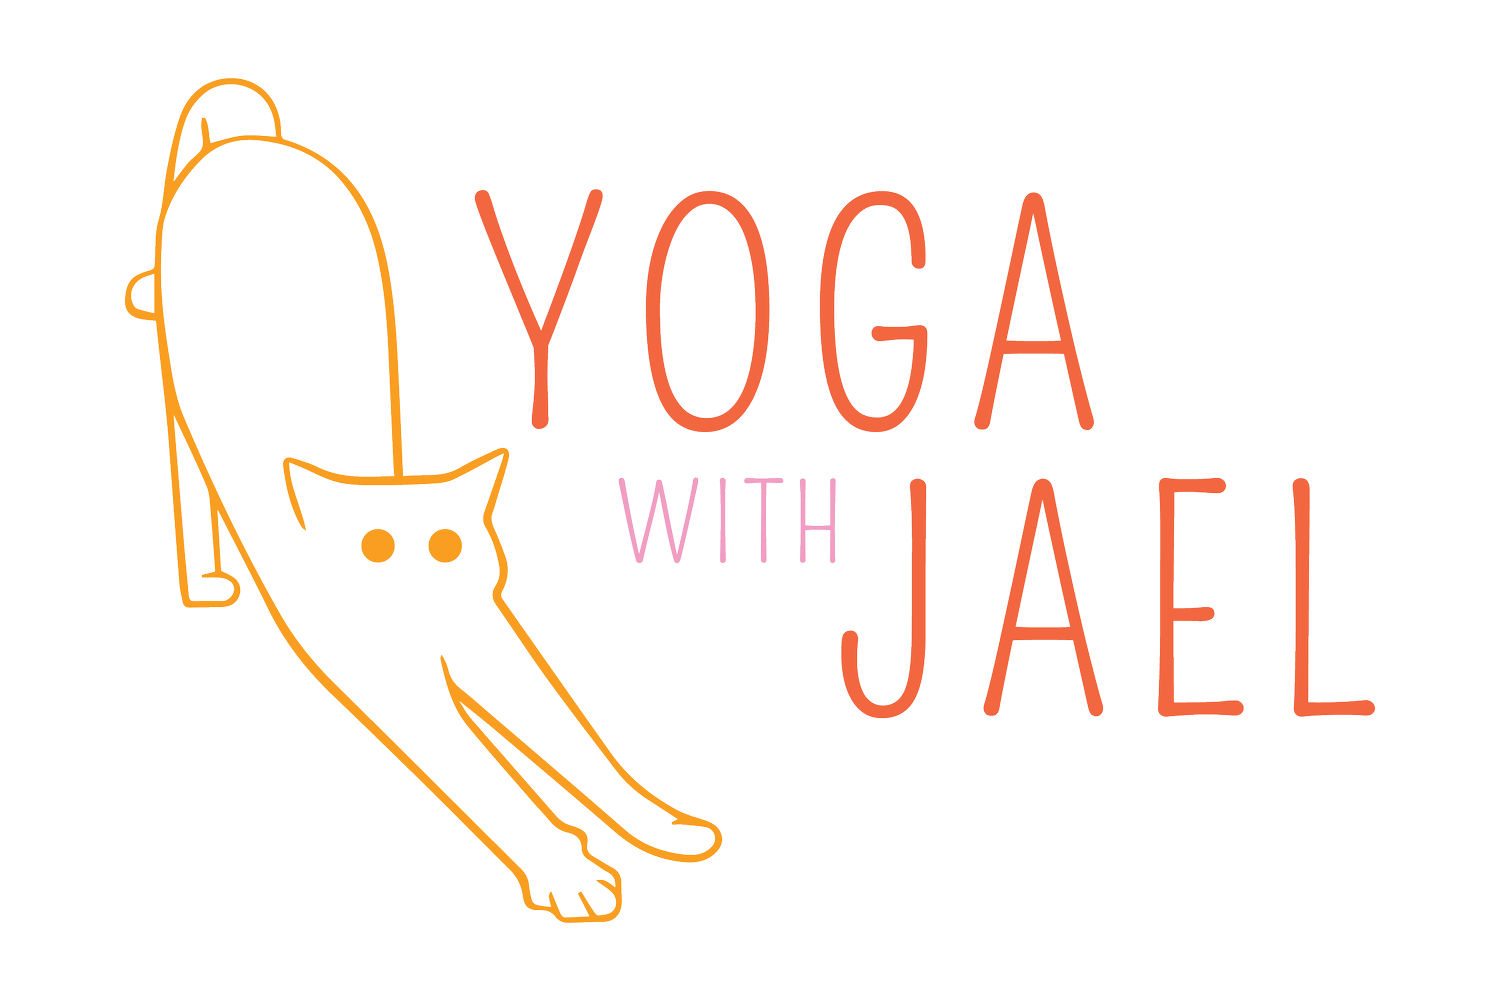 Yoga with Jael